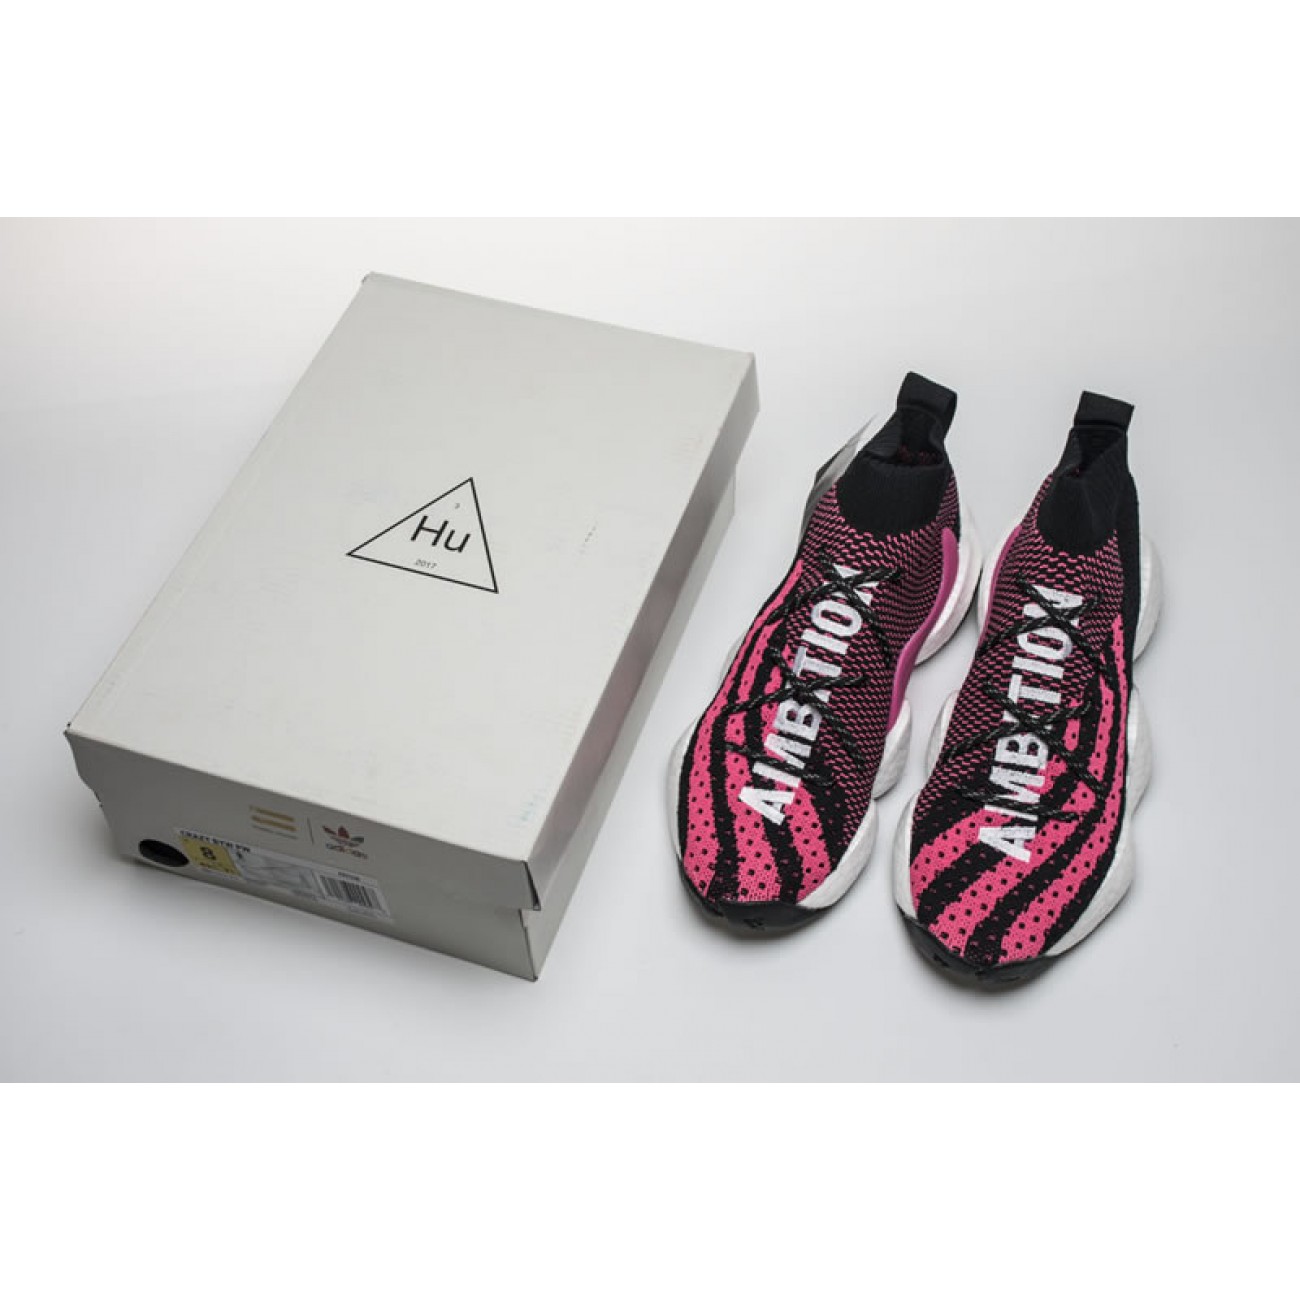 Pharrell Williams x adidas Crazy BYW "Solar Pink" Black Mens Womens Size Basketball Shoes G28182